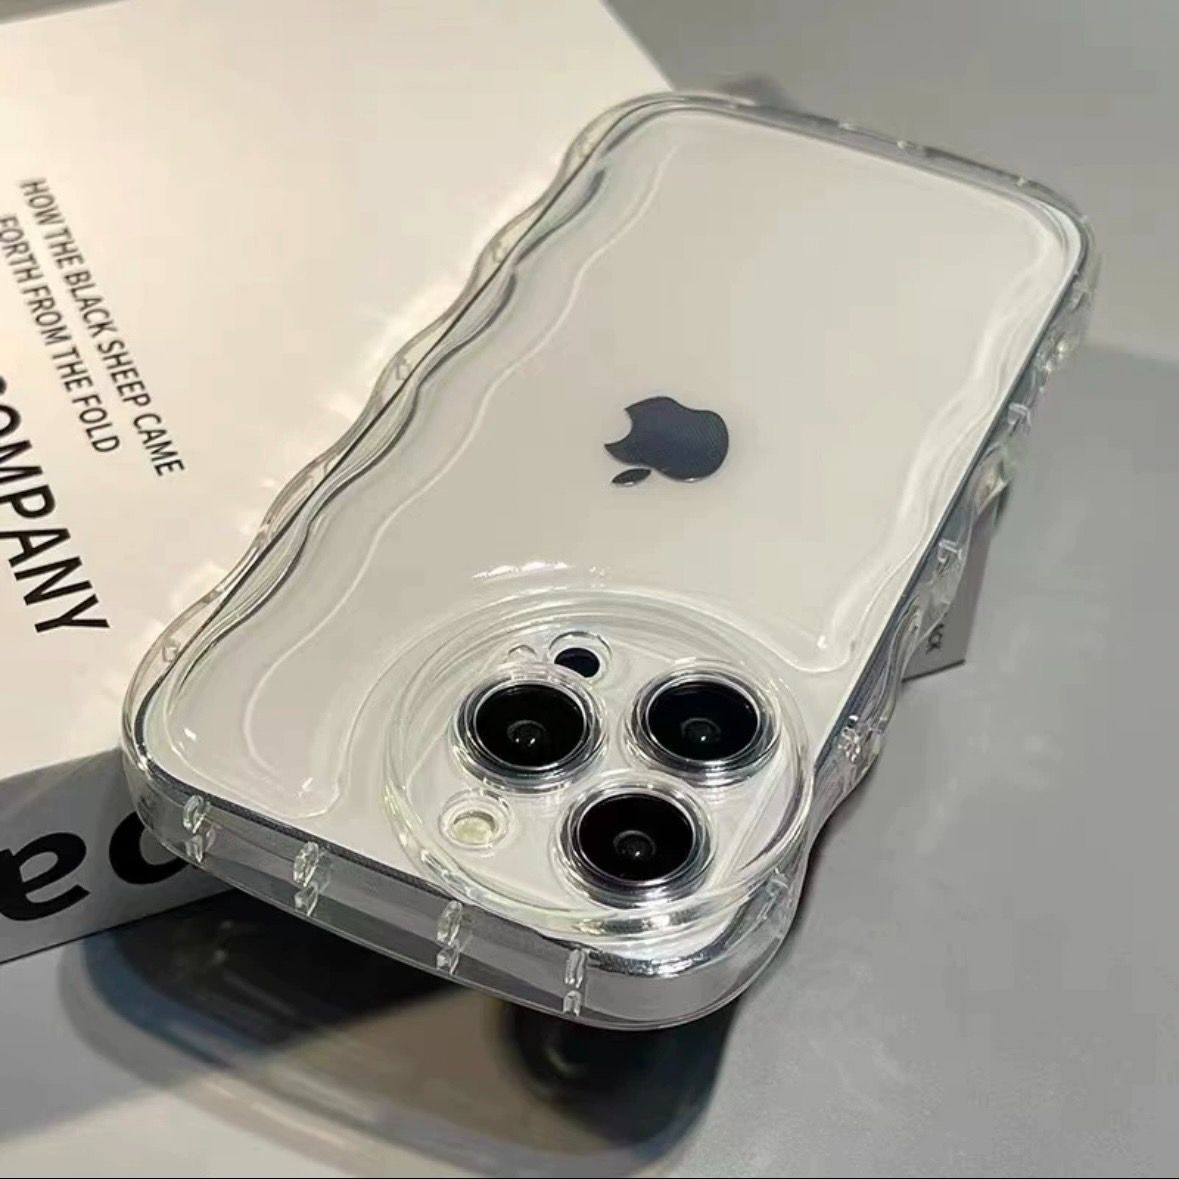 iPhone14promax ケース アイフォン14promax あいふぉん14promax 14promax アイフォン14promaxケース 写真入れ 背面収納 透明 クリア クリアケース 透明ケース アイフォン 耐衝撃 あいふぉん14promaxケース